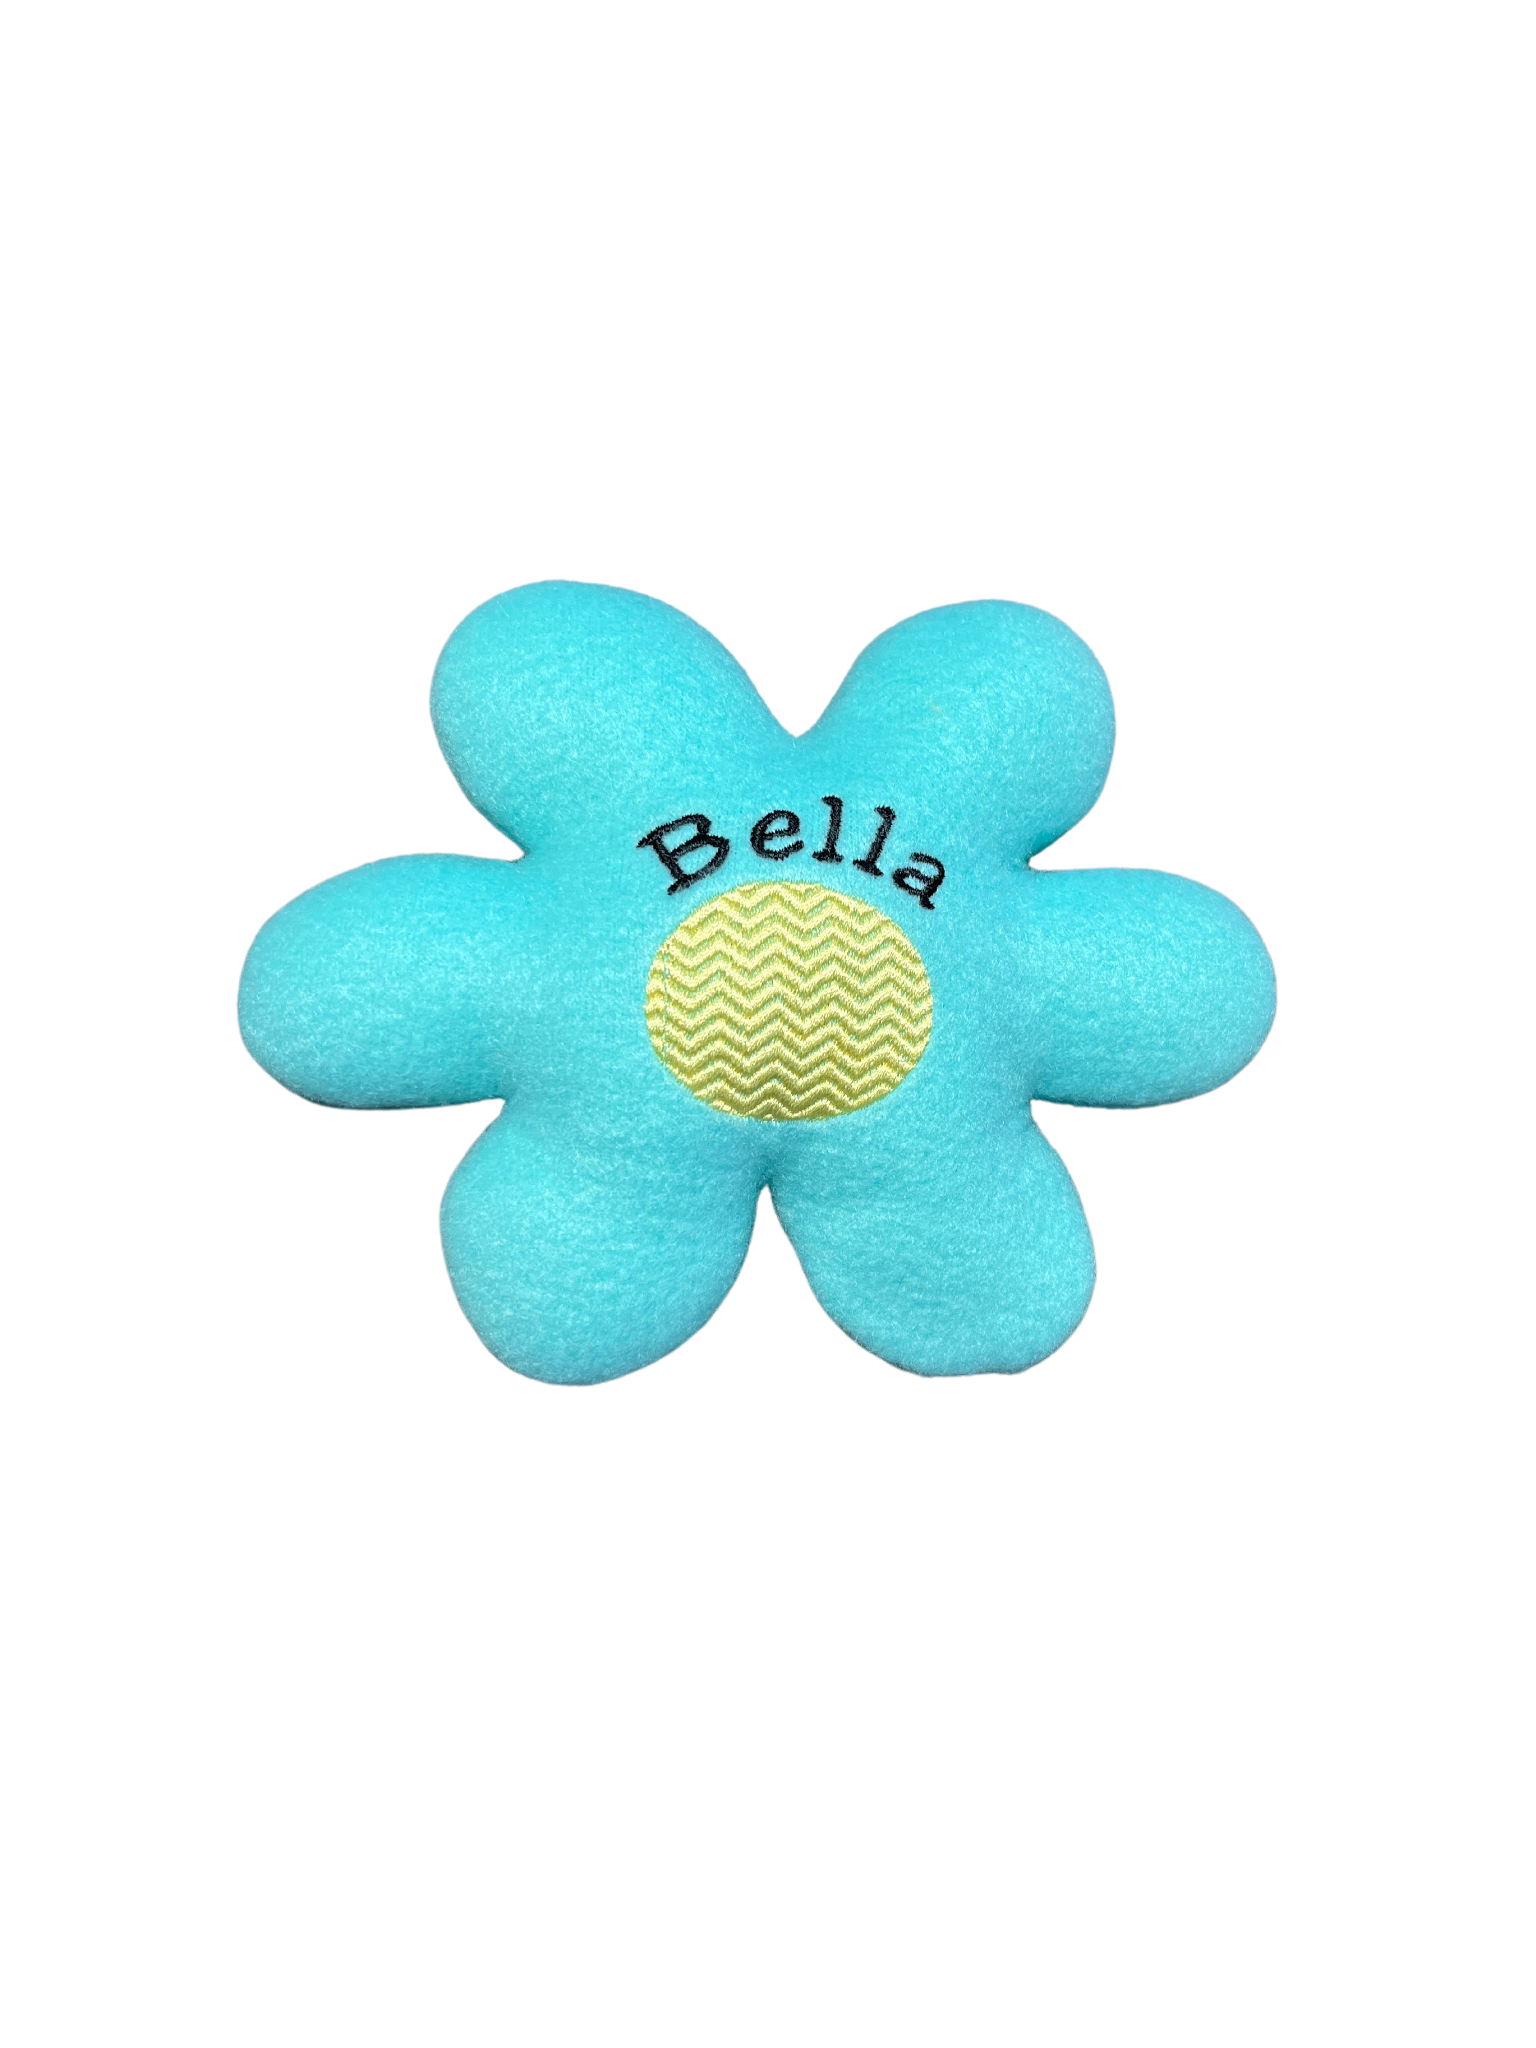 Retro Daisy Custom Dog Toy- Personalized Squeaky Flower Toy Dog Toys   